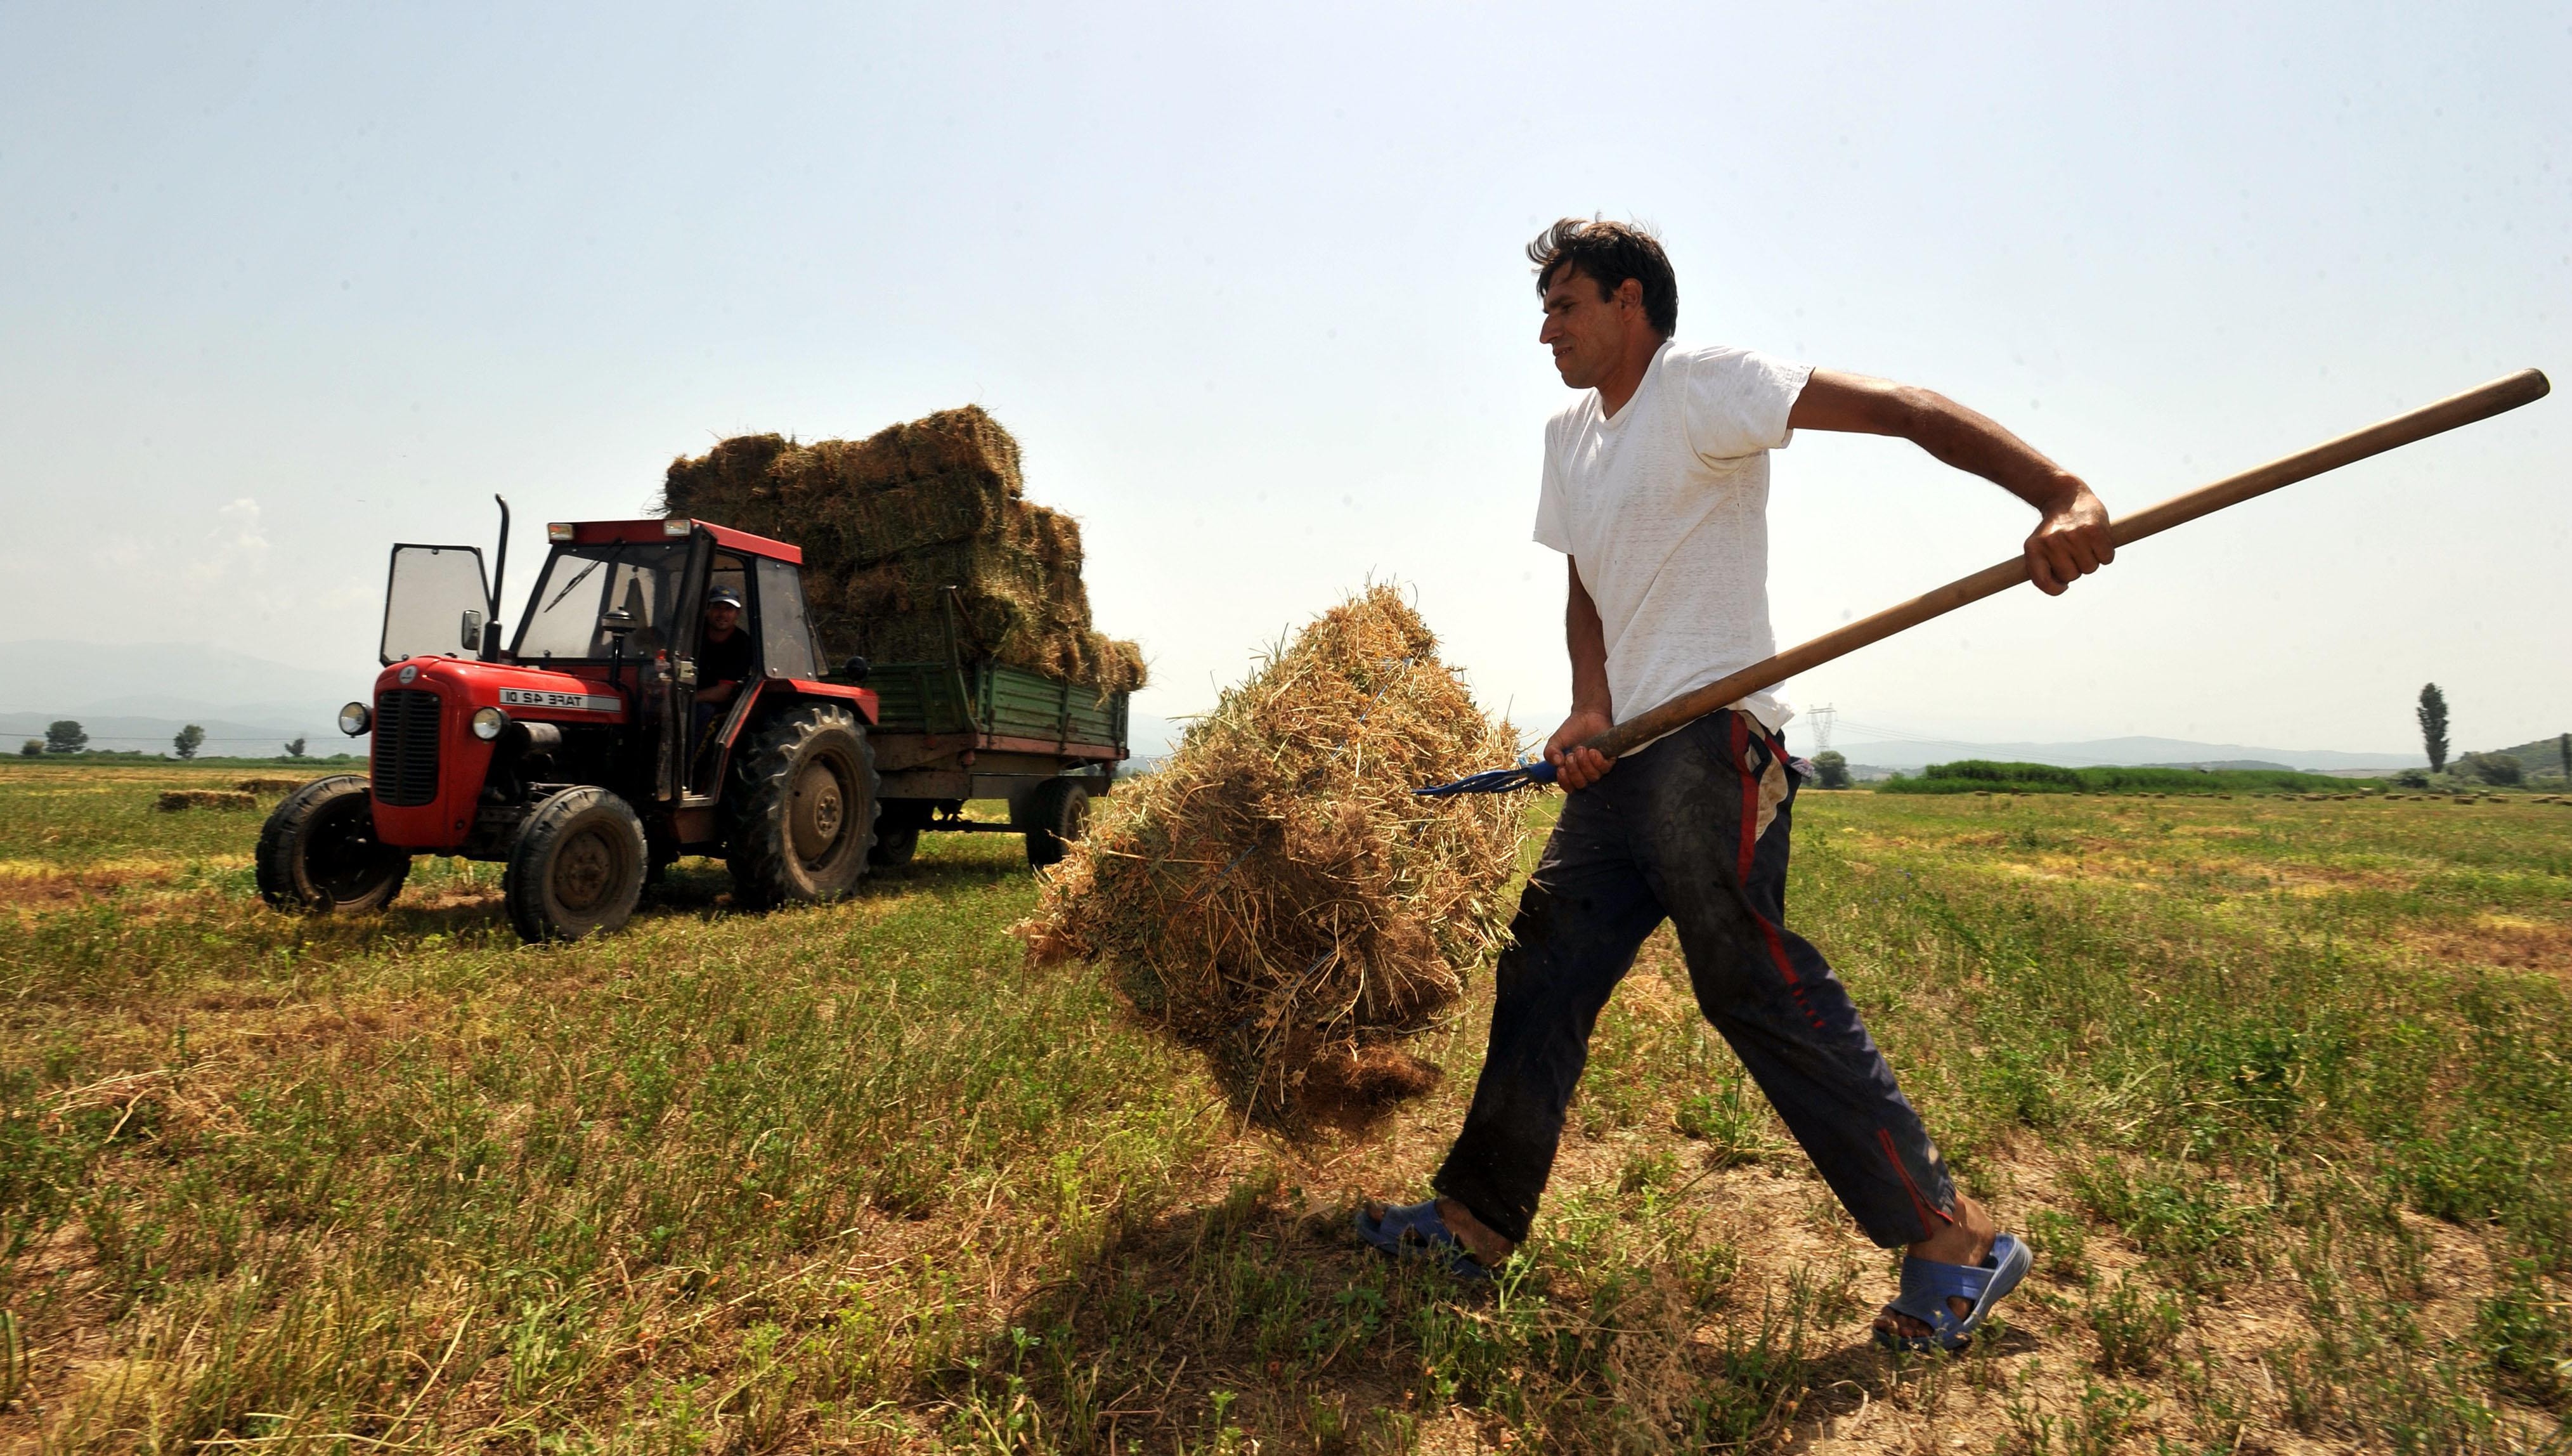 An unidentified farmer collects a bale of hay near southeastern Macedonian village of Stojakovo, on Monday, June 14, 2010.   (AP Photo/Boris Grdanoski)